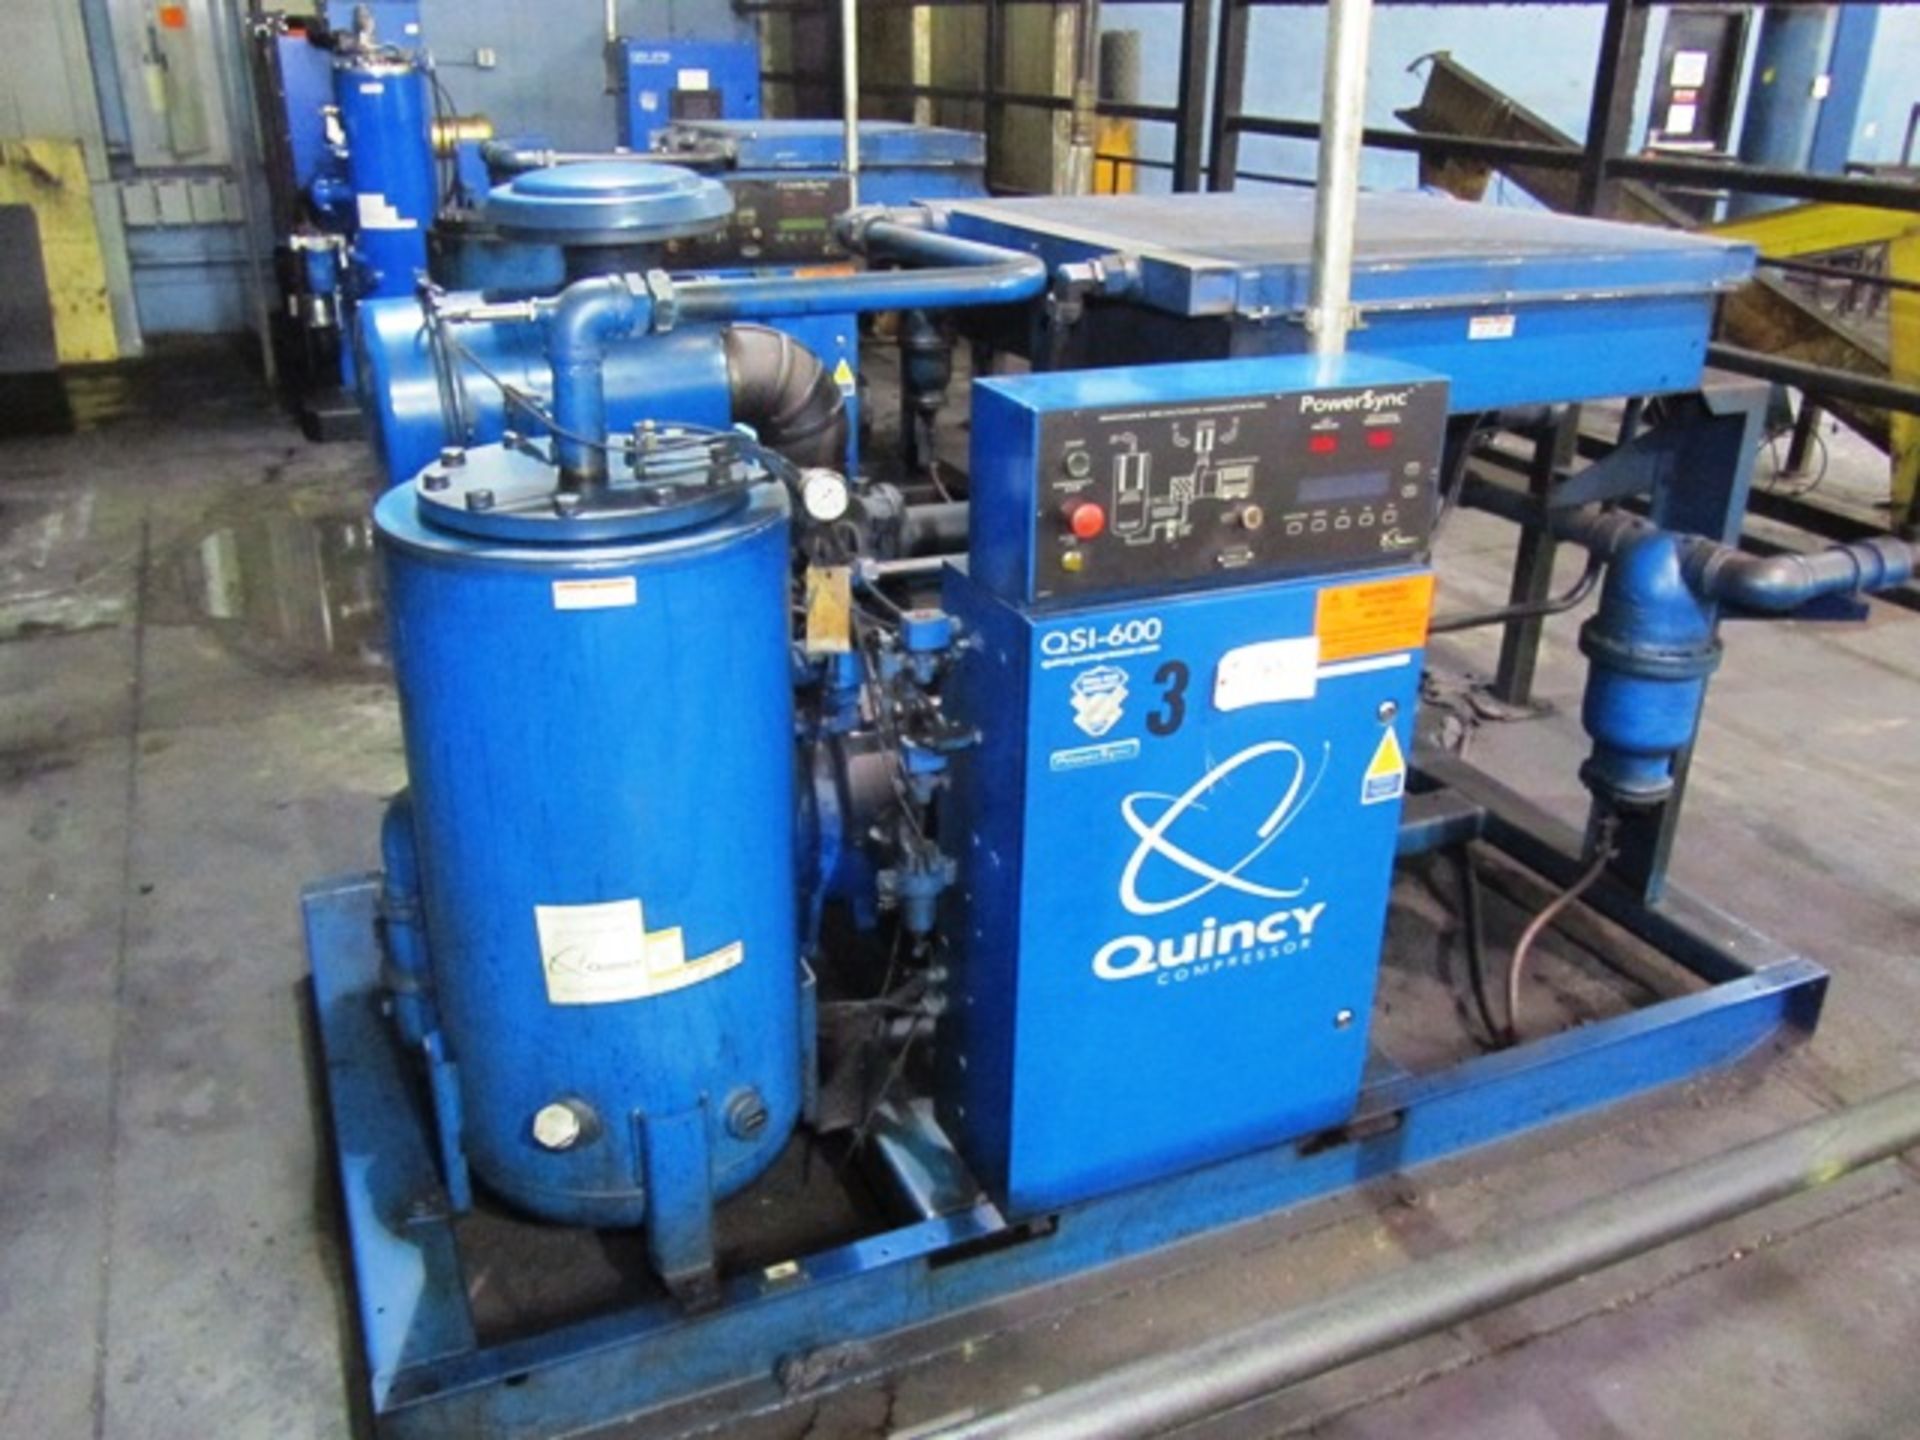 Quincy Model QSI-600 125 HP Rotary Screw Air Compressor